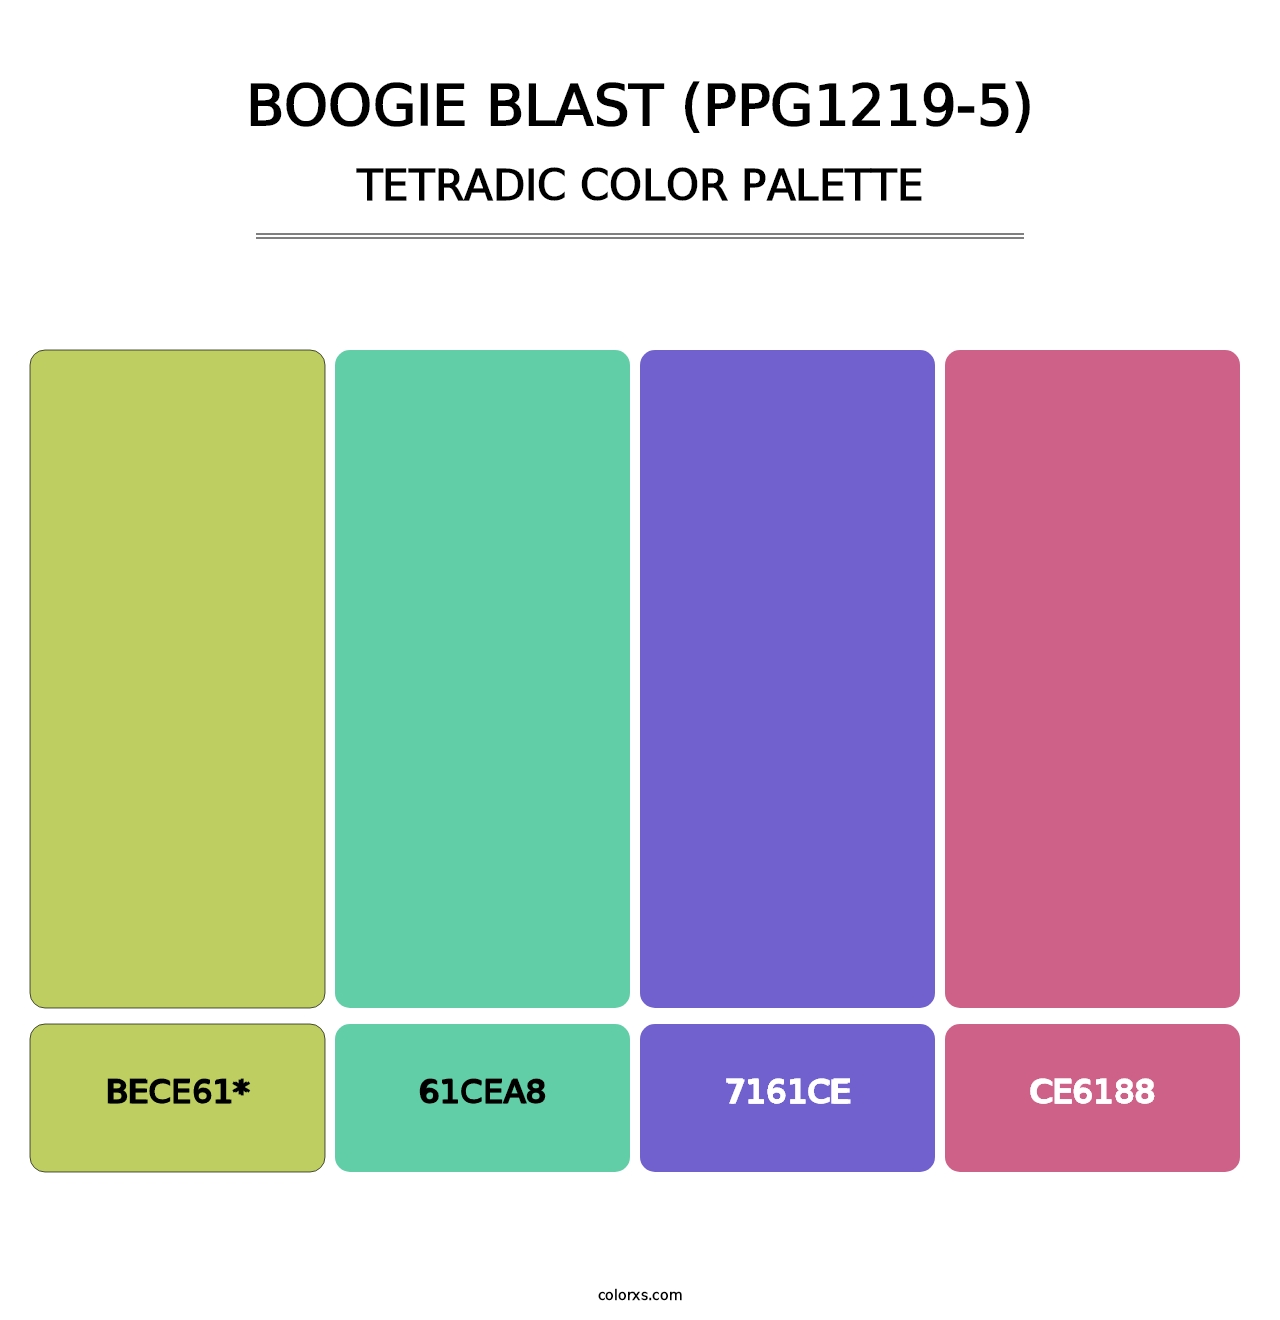 Boogie Blast (PPG1219-5) - Tetradic Color Palette